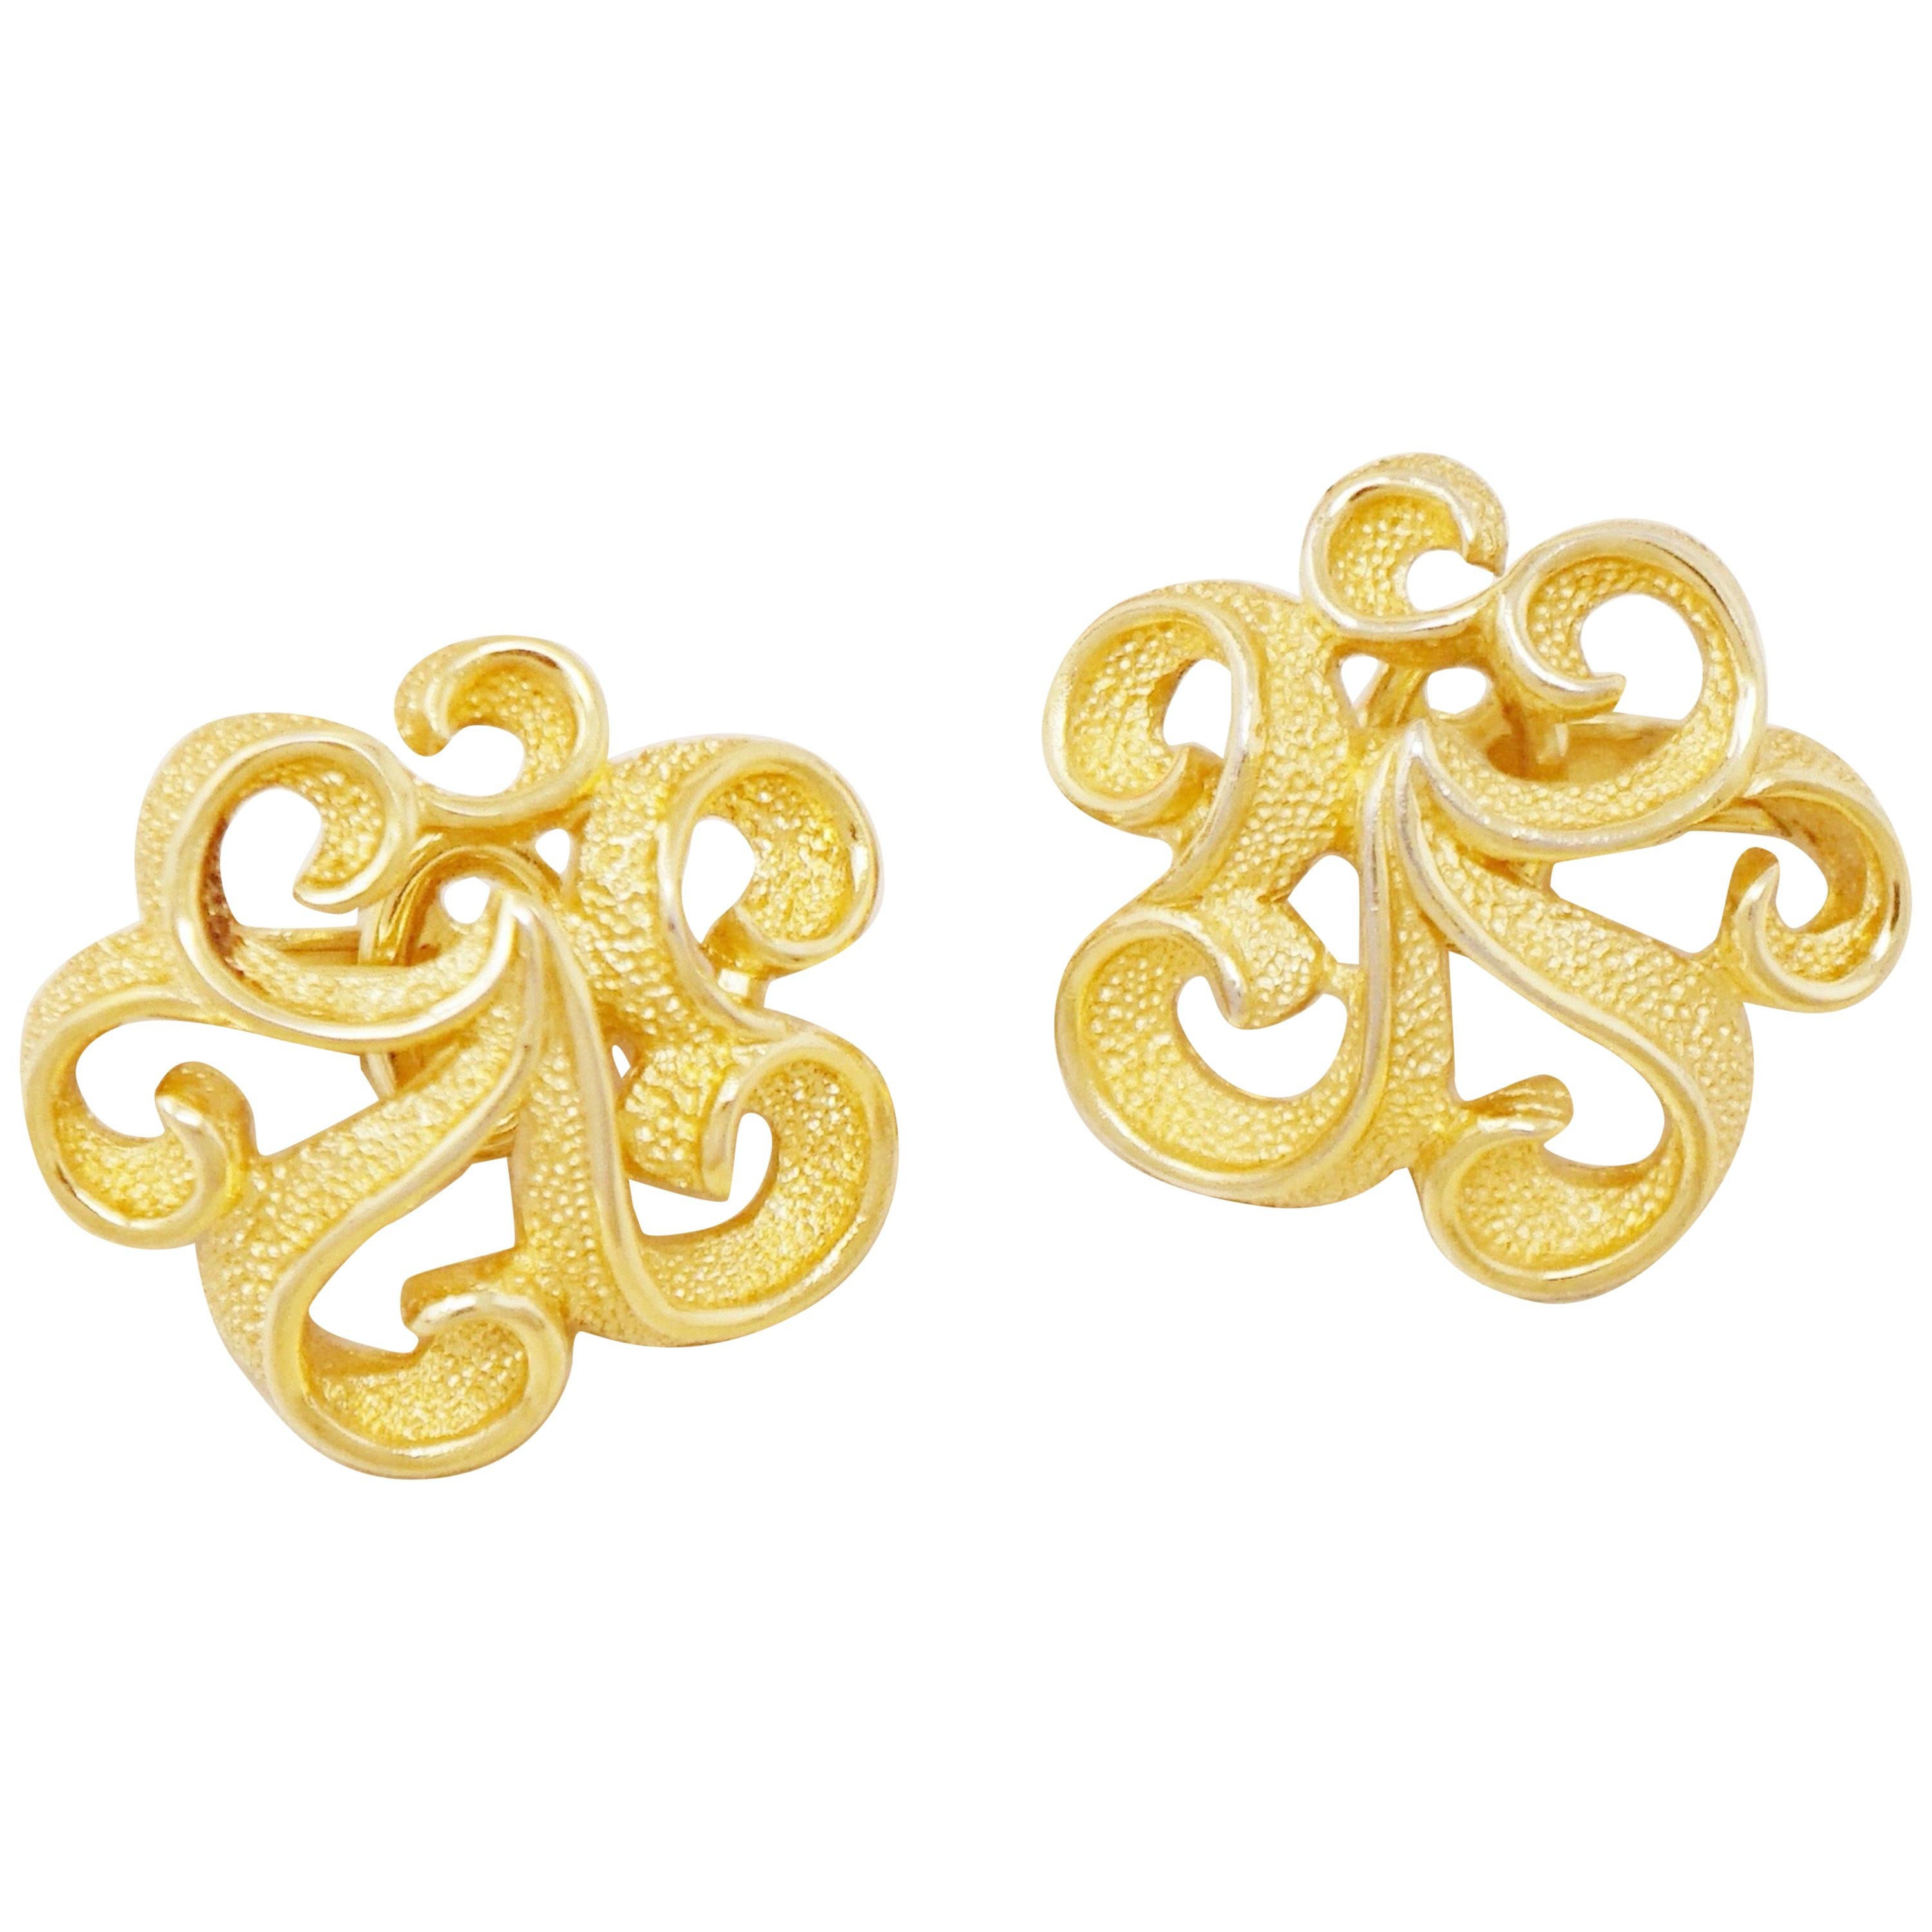 Vintage Gilt Abstract Swirl Earrings by Crown Trifari, 1960s